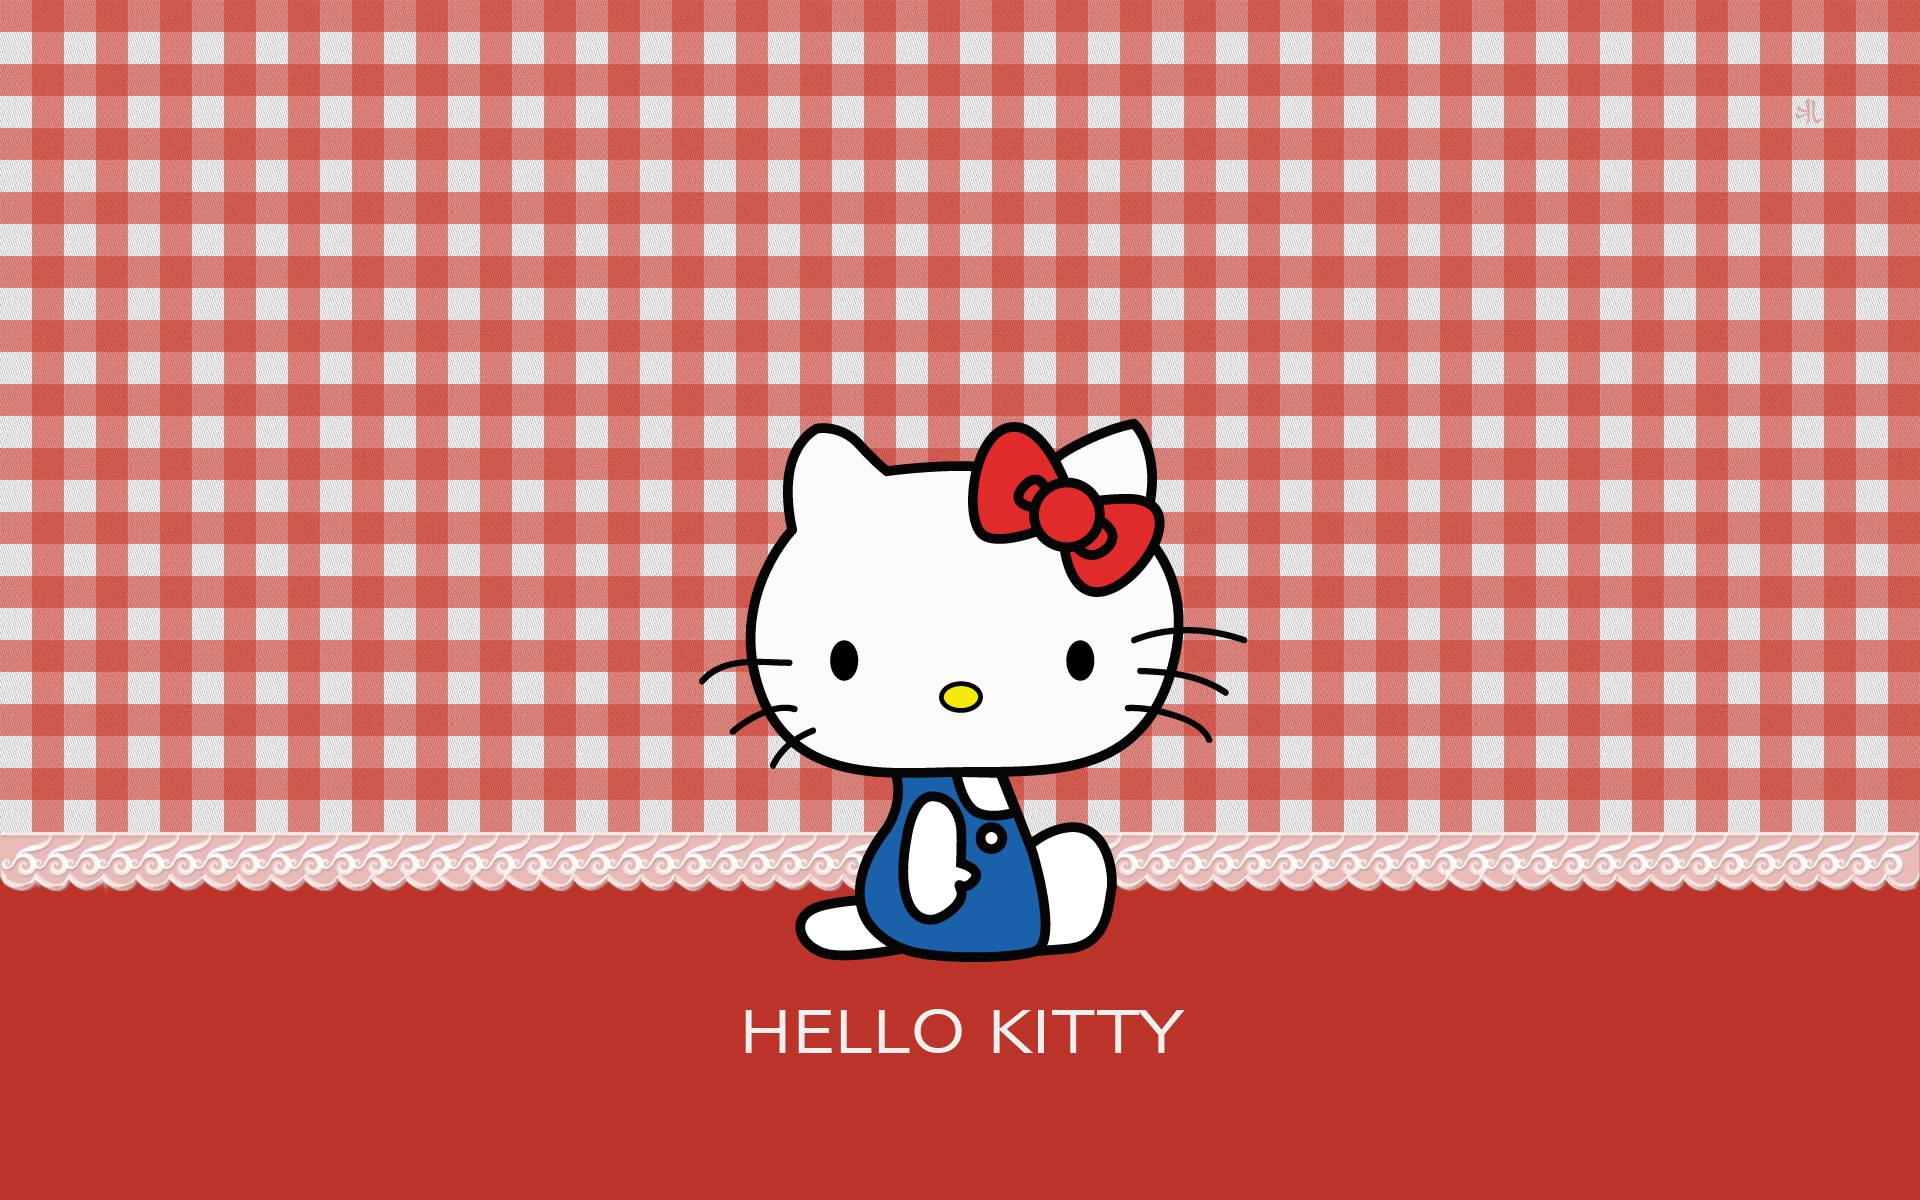 Hello Kitty Wallpaper For Computer 14142 Full HD Wallpaper Desktop